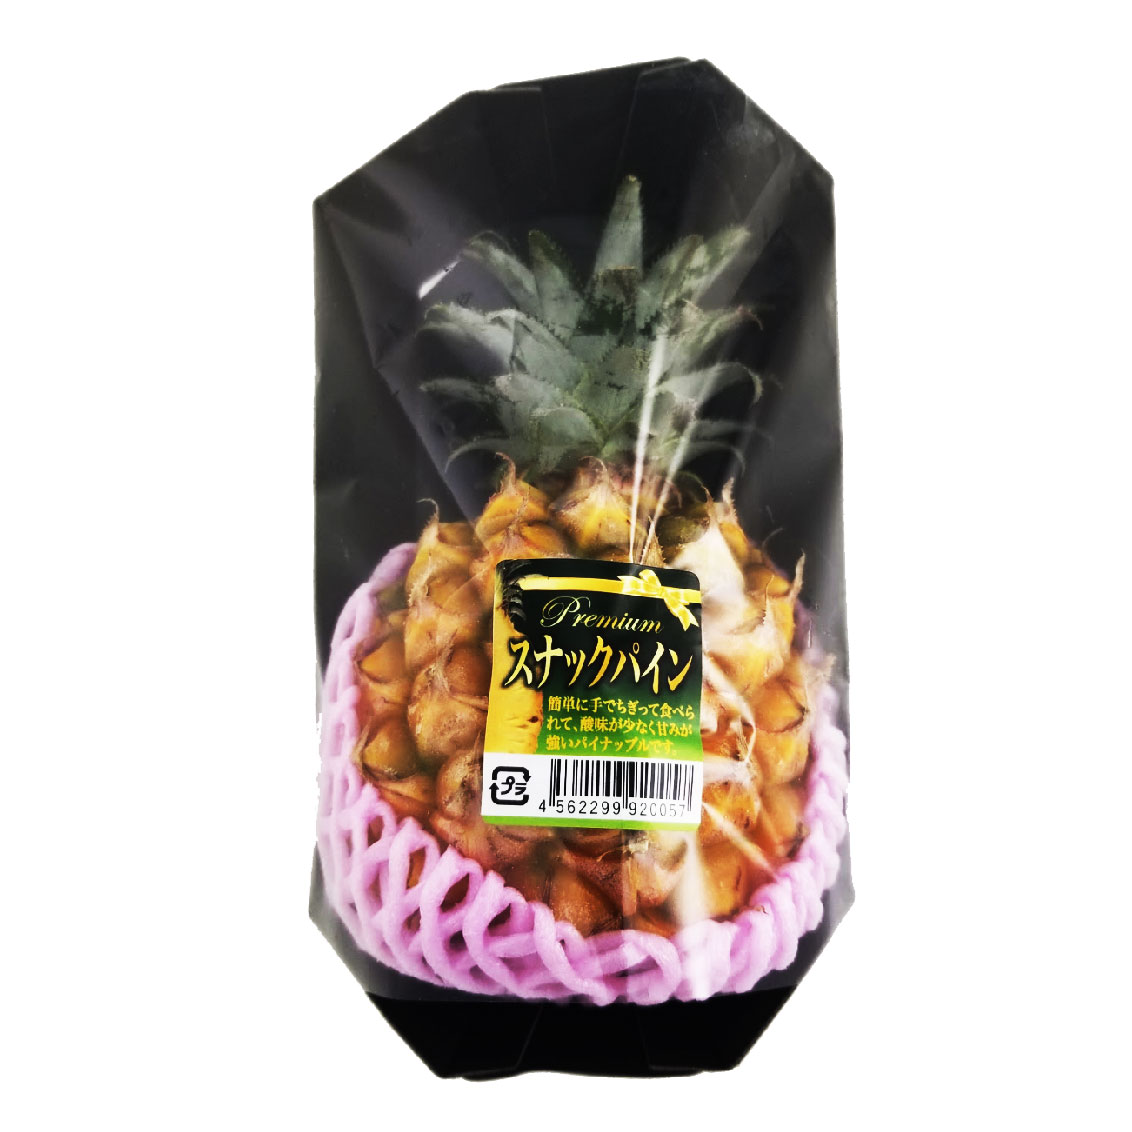 Okinawa Baby Pineapple 360g - Japan*